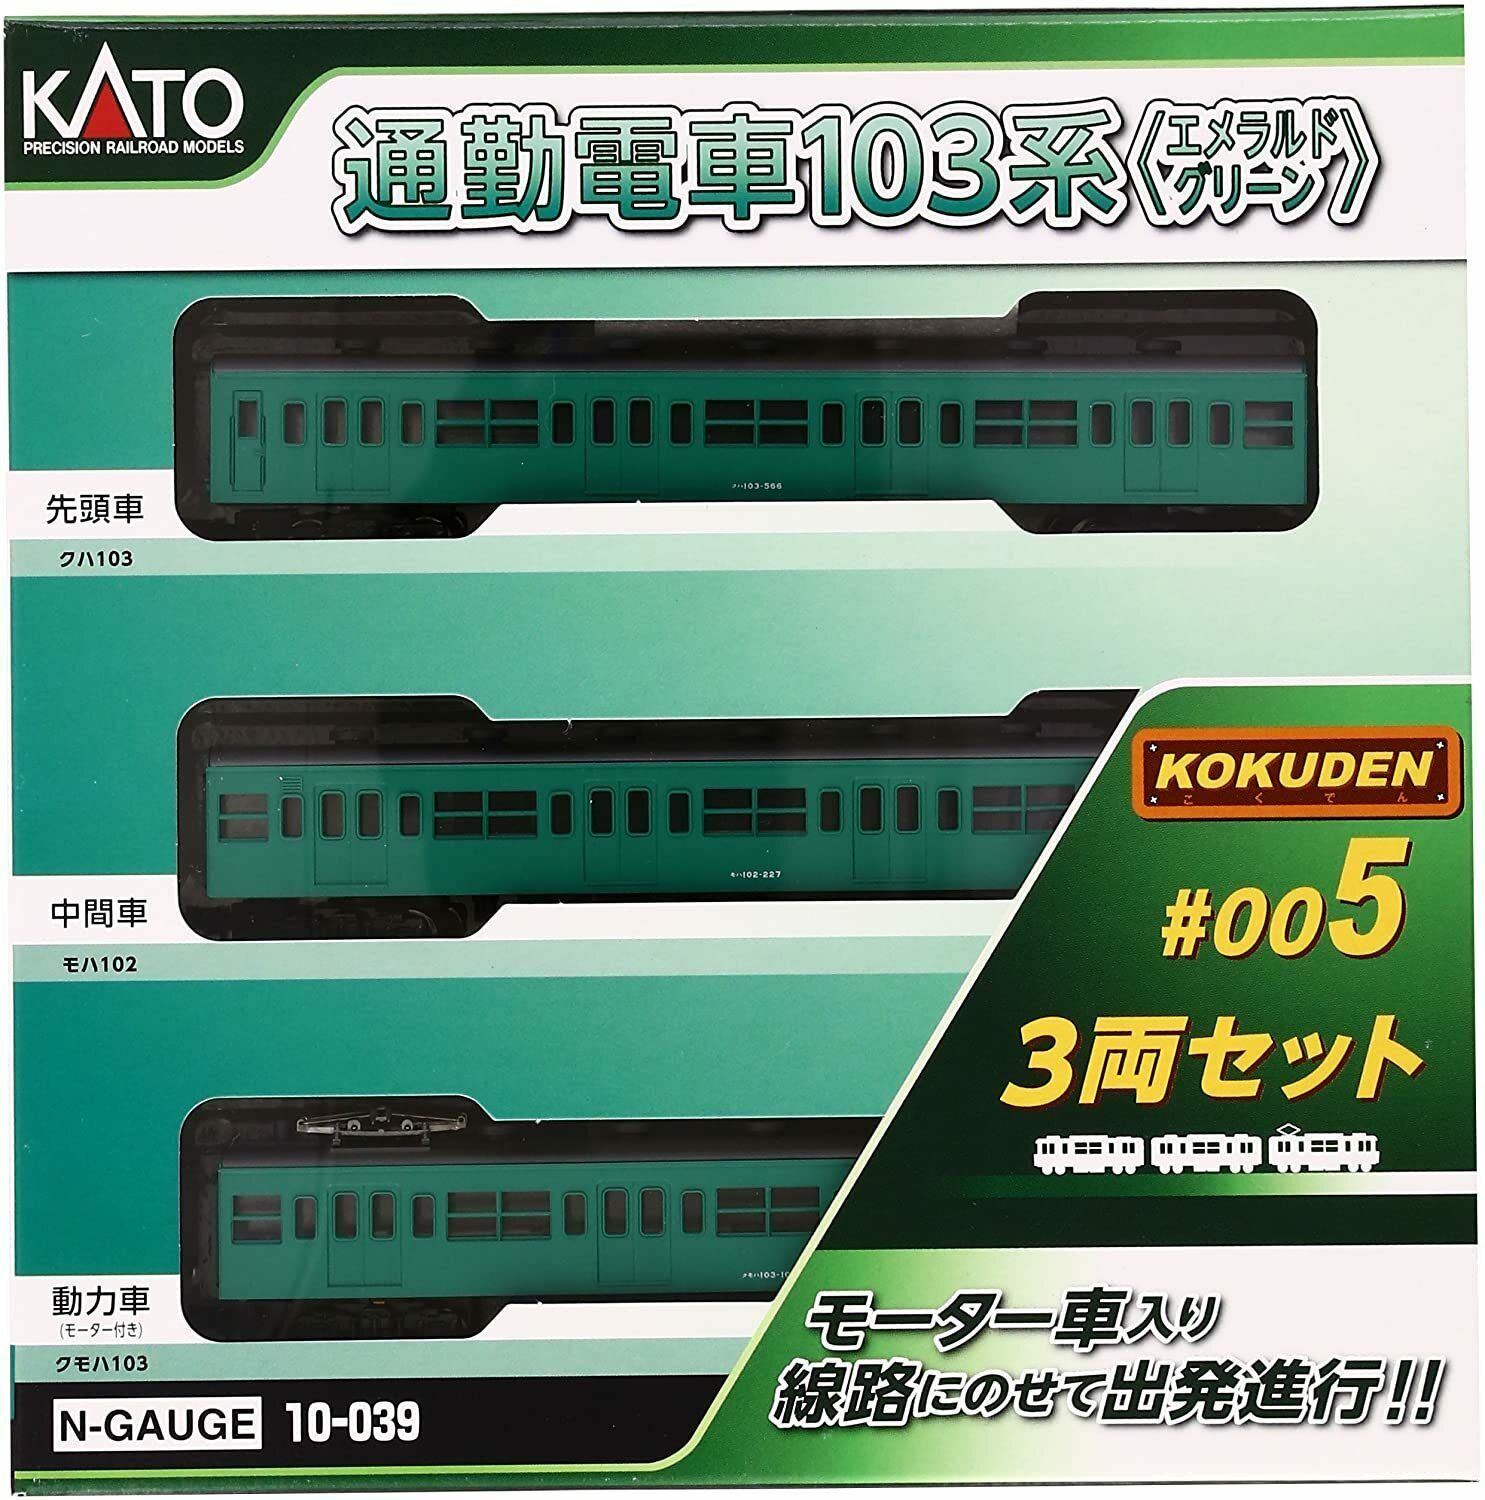 KATO N gauge commuter train 103 series KOKUDEN-005 emerald 3-car set 10-039